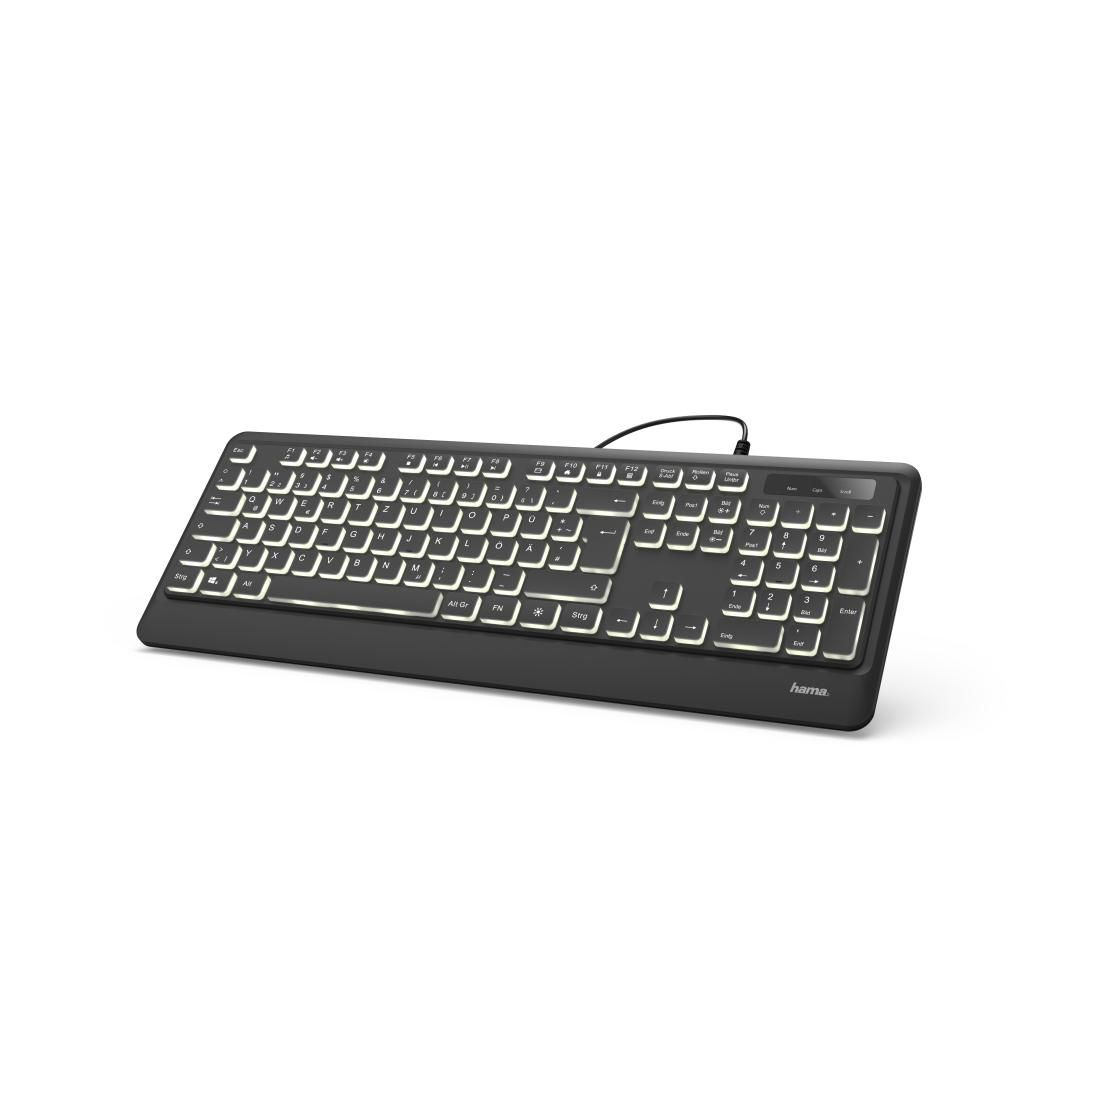 Hama 182671 W128275115 Kc-550 Keyboard Usb Qwertz 